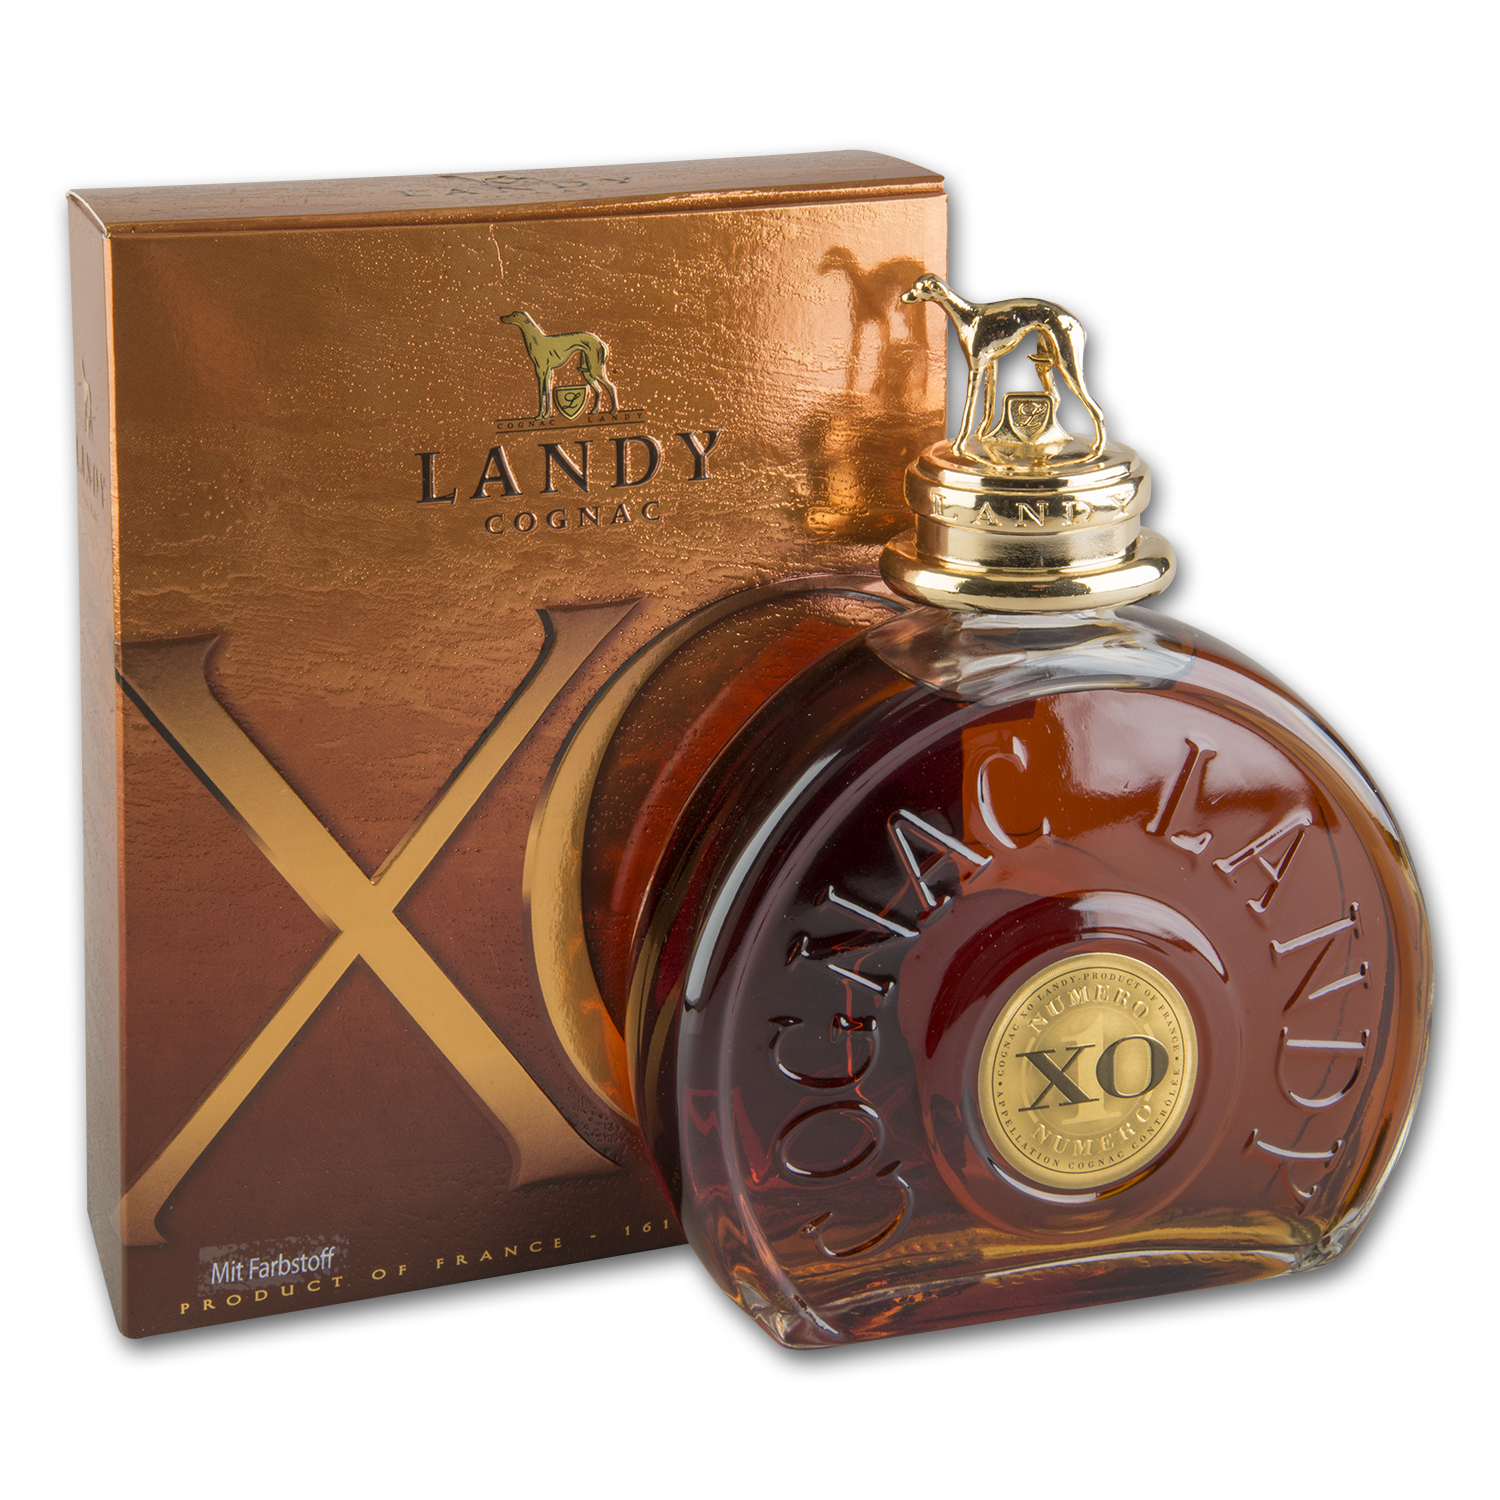 Landy XO Cognac 40% vol., 0,7l